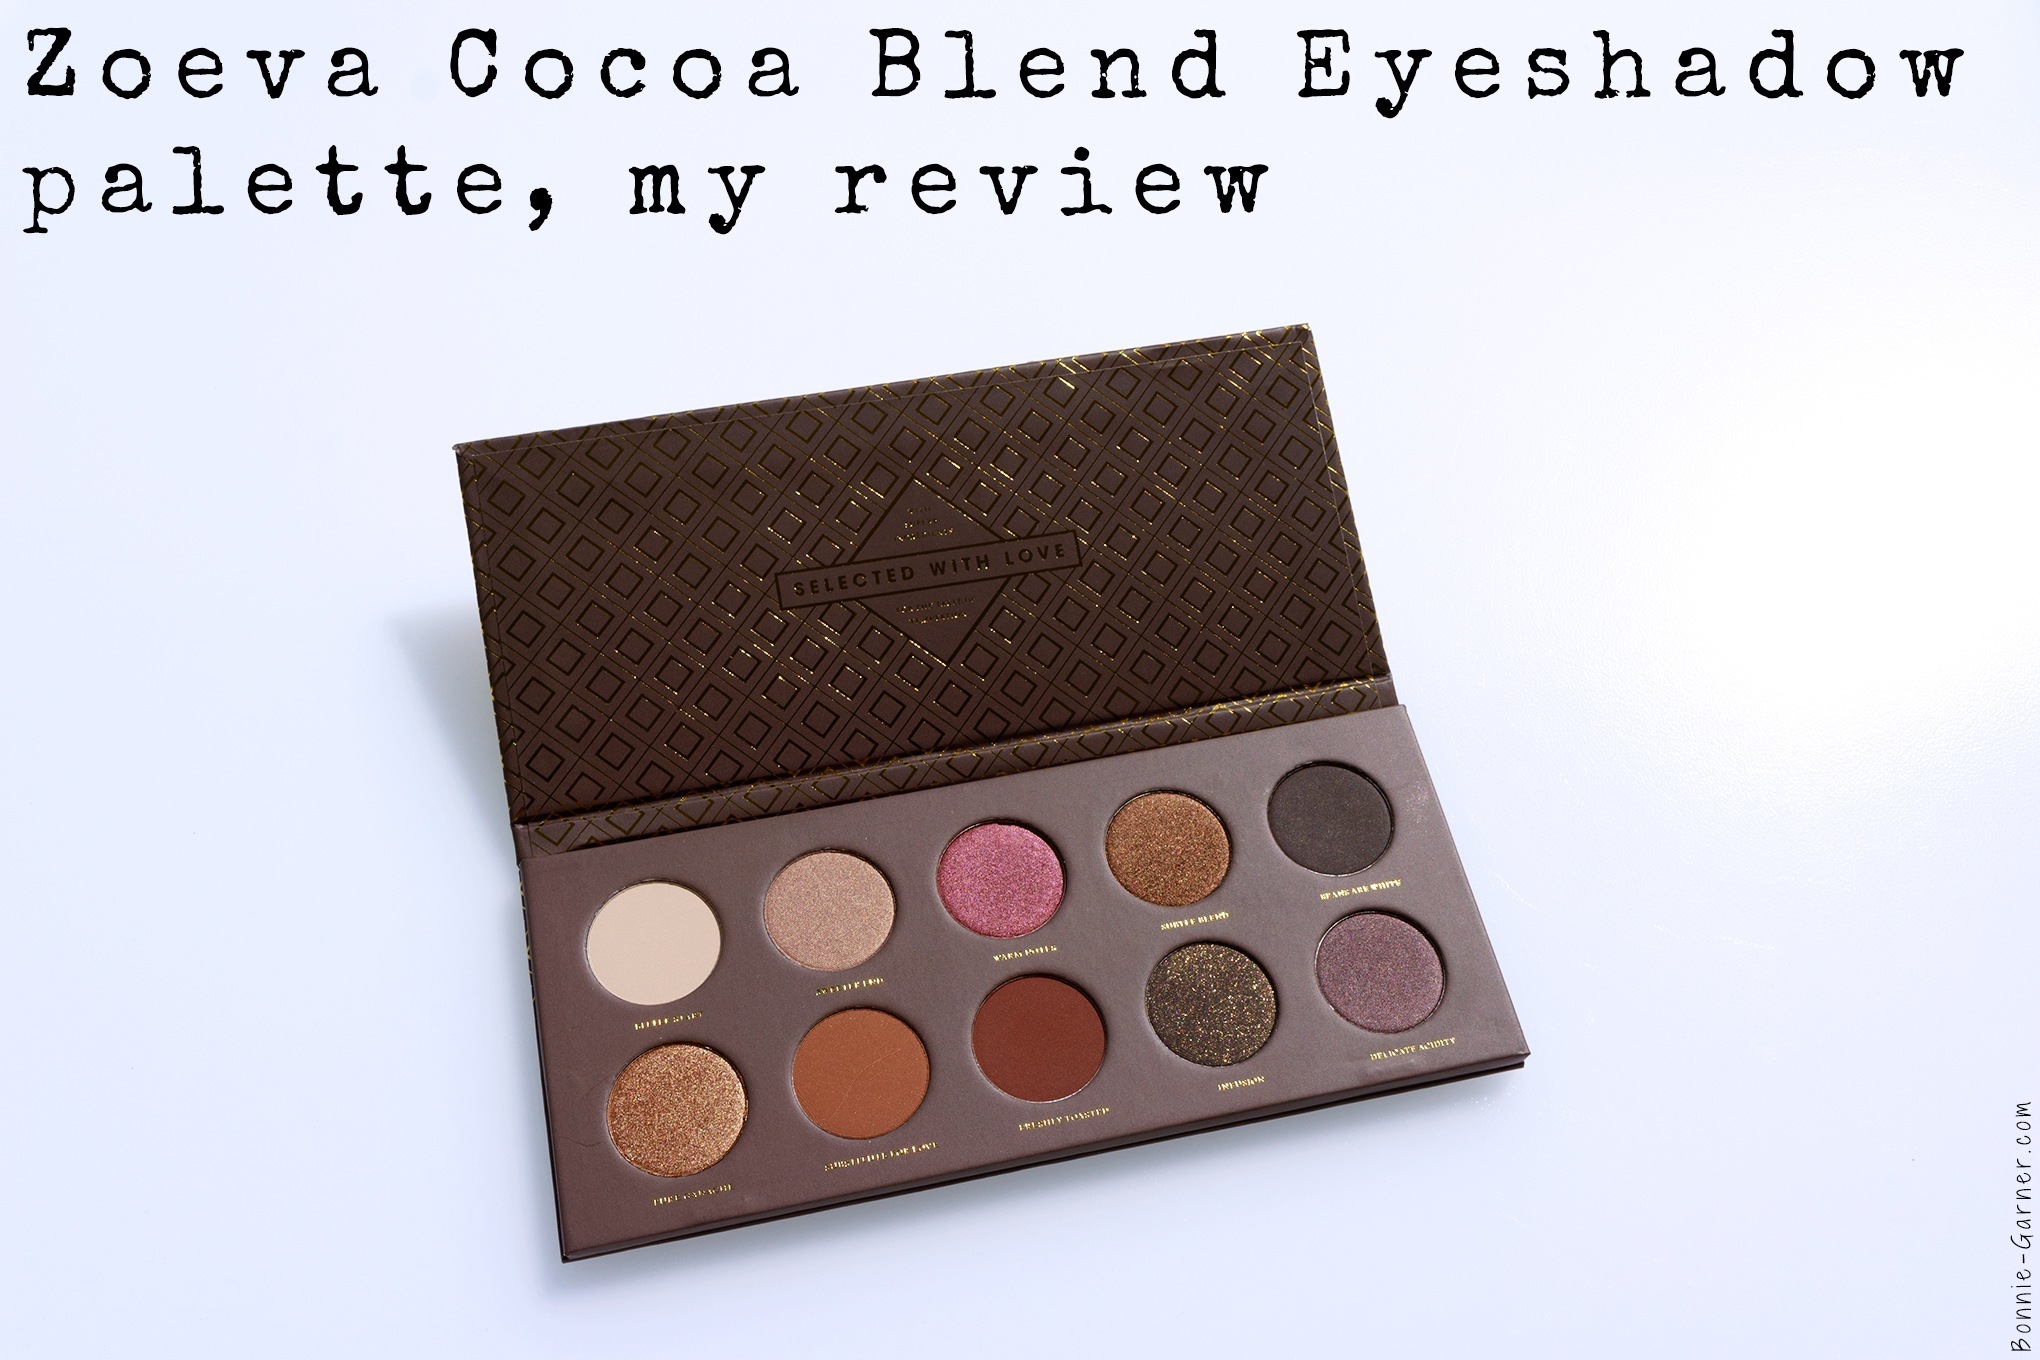 ZOEVA Cocoa Blend eyeshadow palette